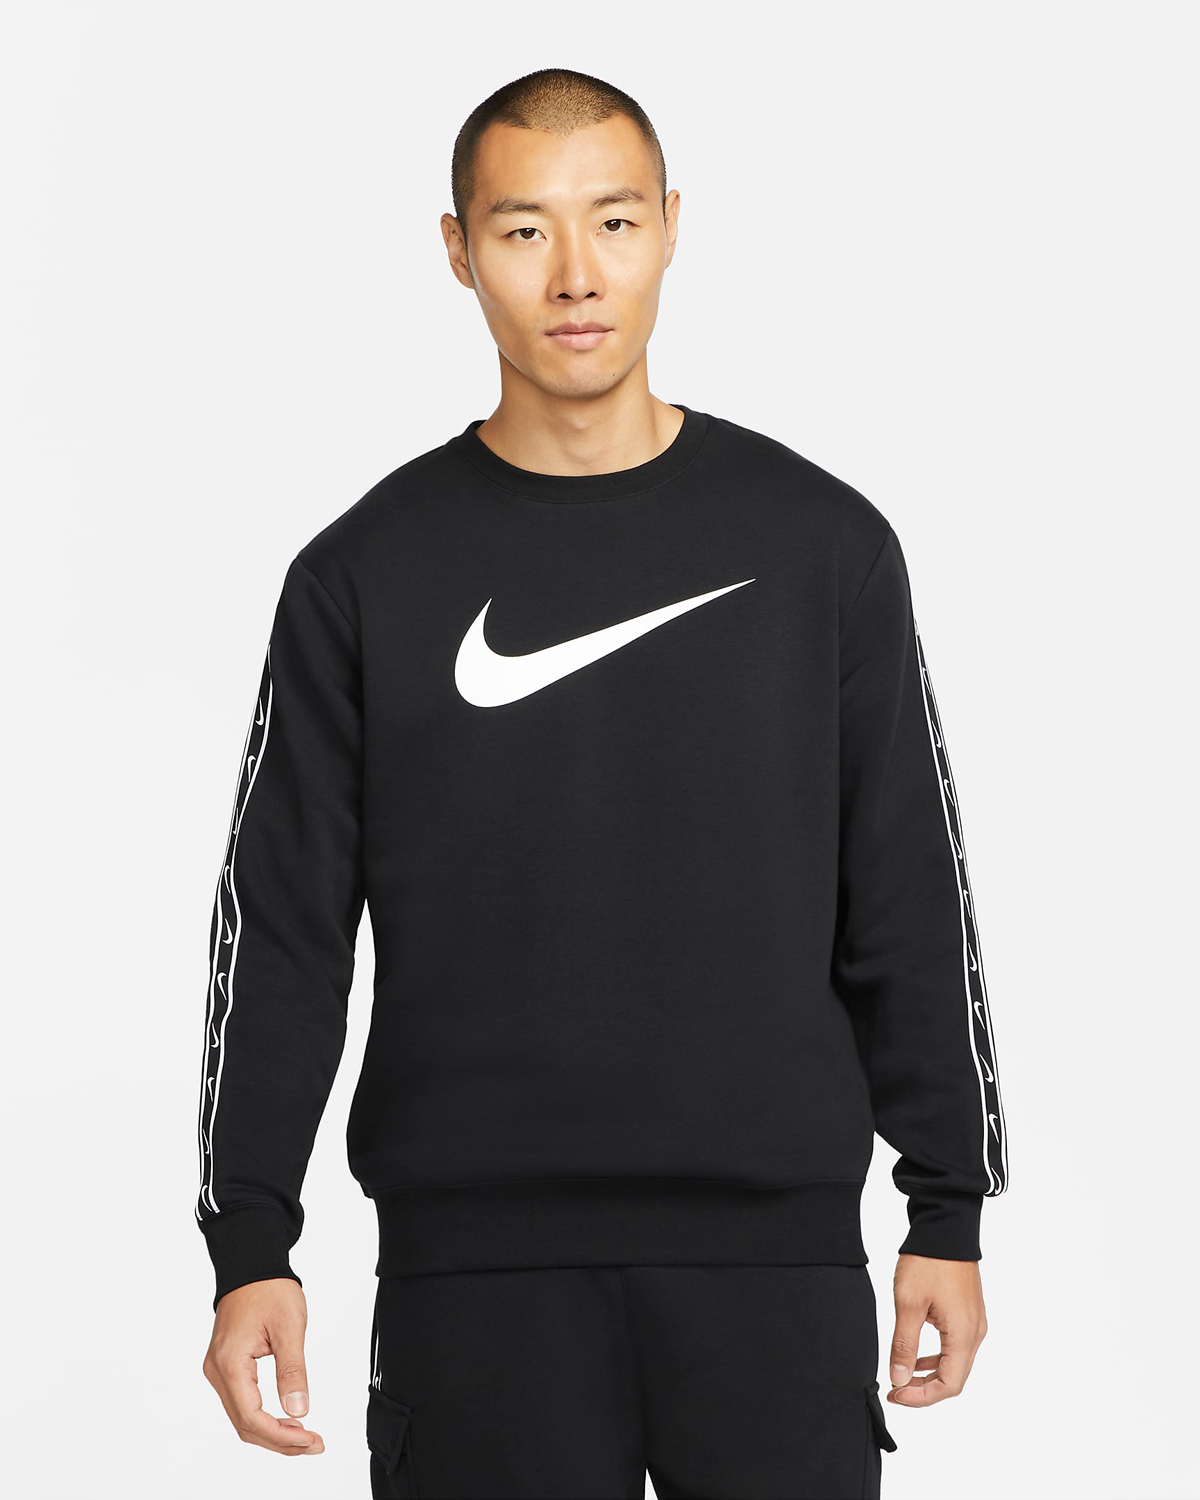 Nike-Sportswear-Repeat-Sweatshirt-Black-White